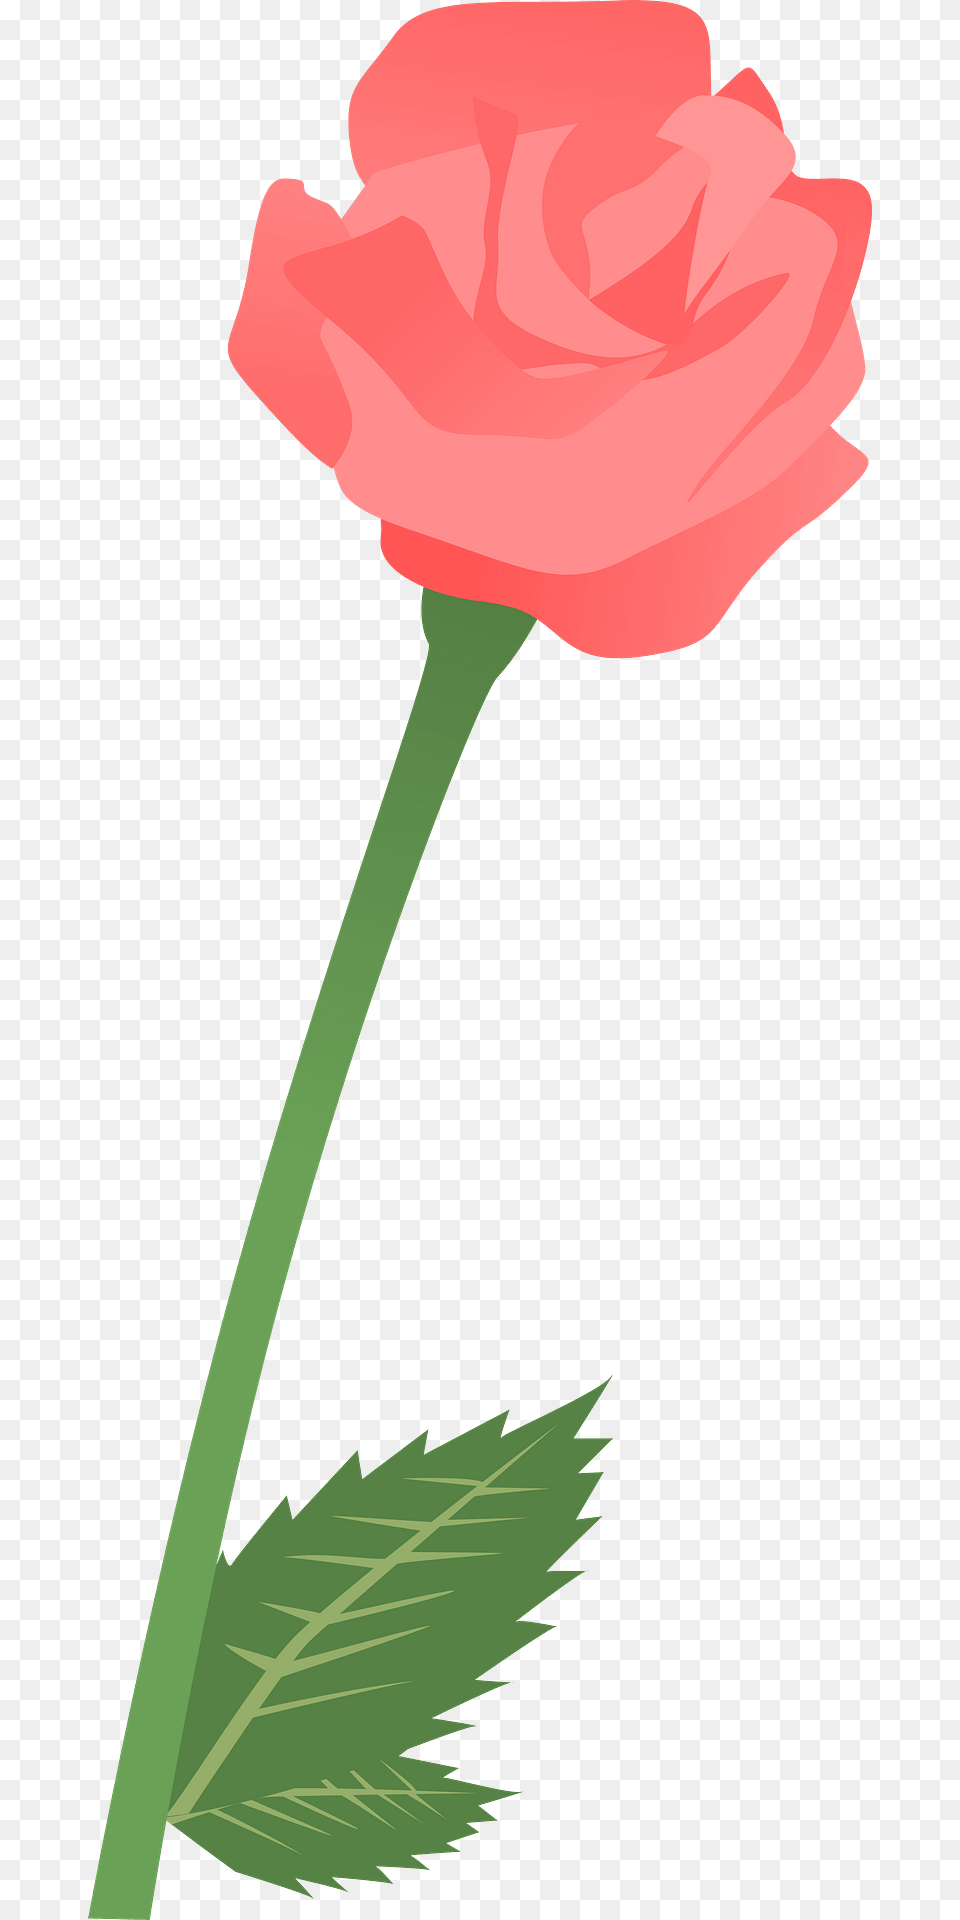 Red Rose On The Stem Clipart, Flower, Plant, Carnation, Petal Png